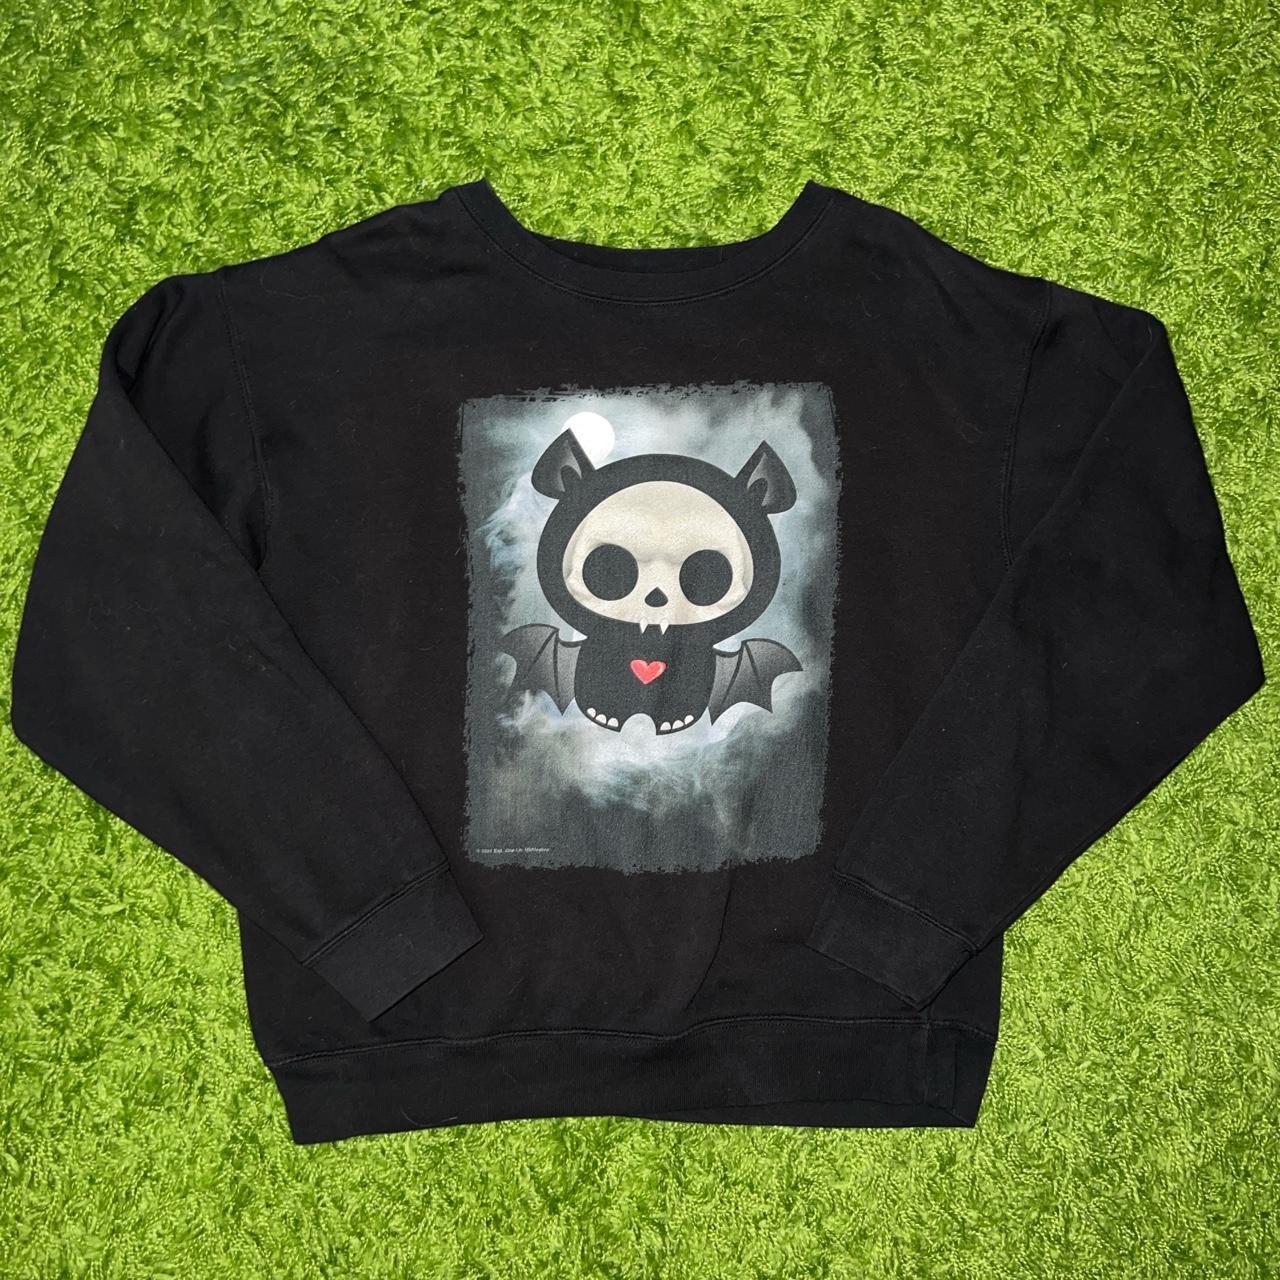 Product Image 1 - Skelanimals Bat Sweatshirt

#hottopic #emo #grunge